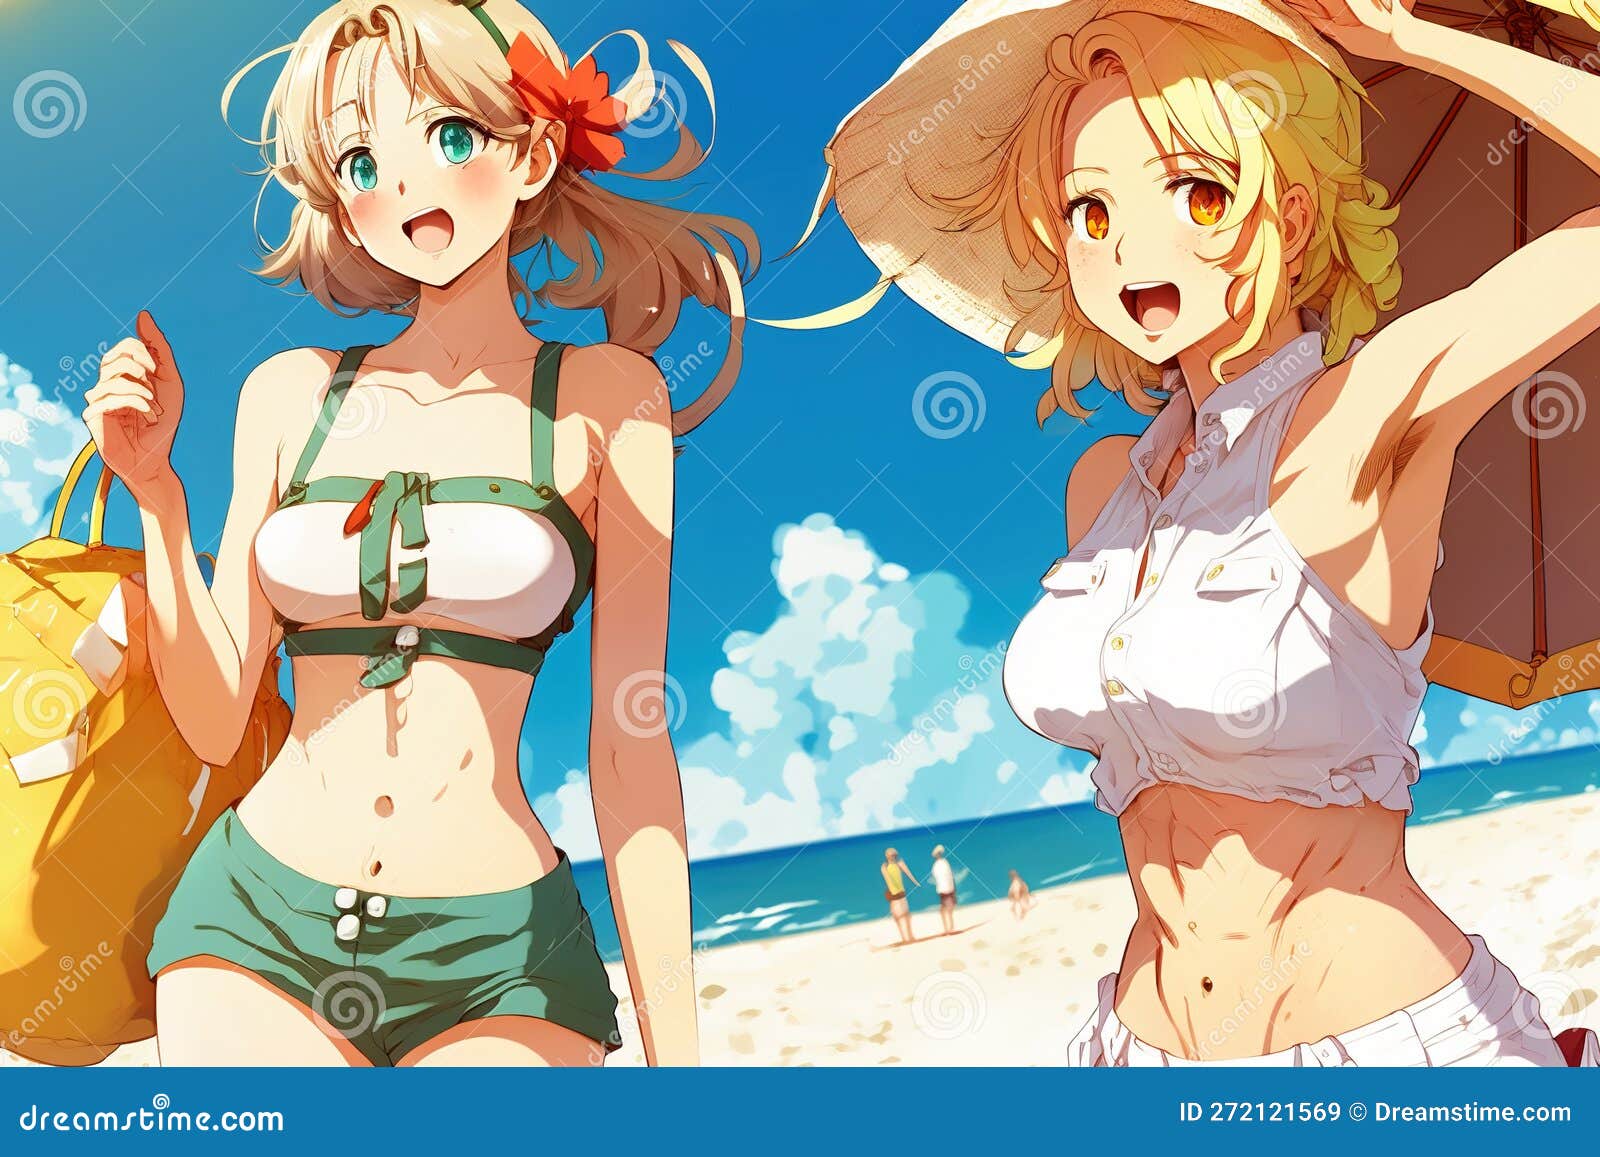 bogdan radosavljevic recommends anime girls at the beach pic